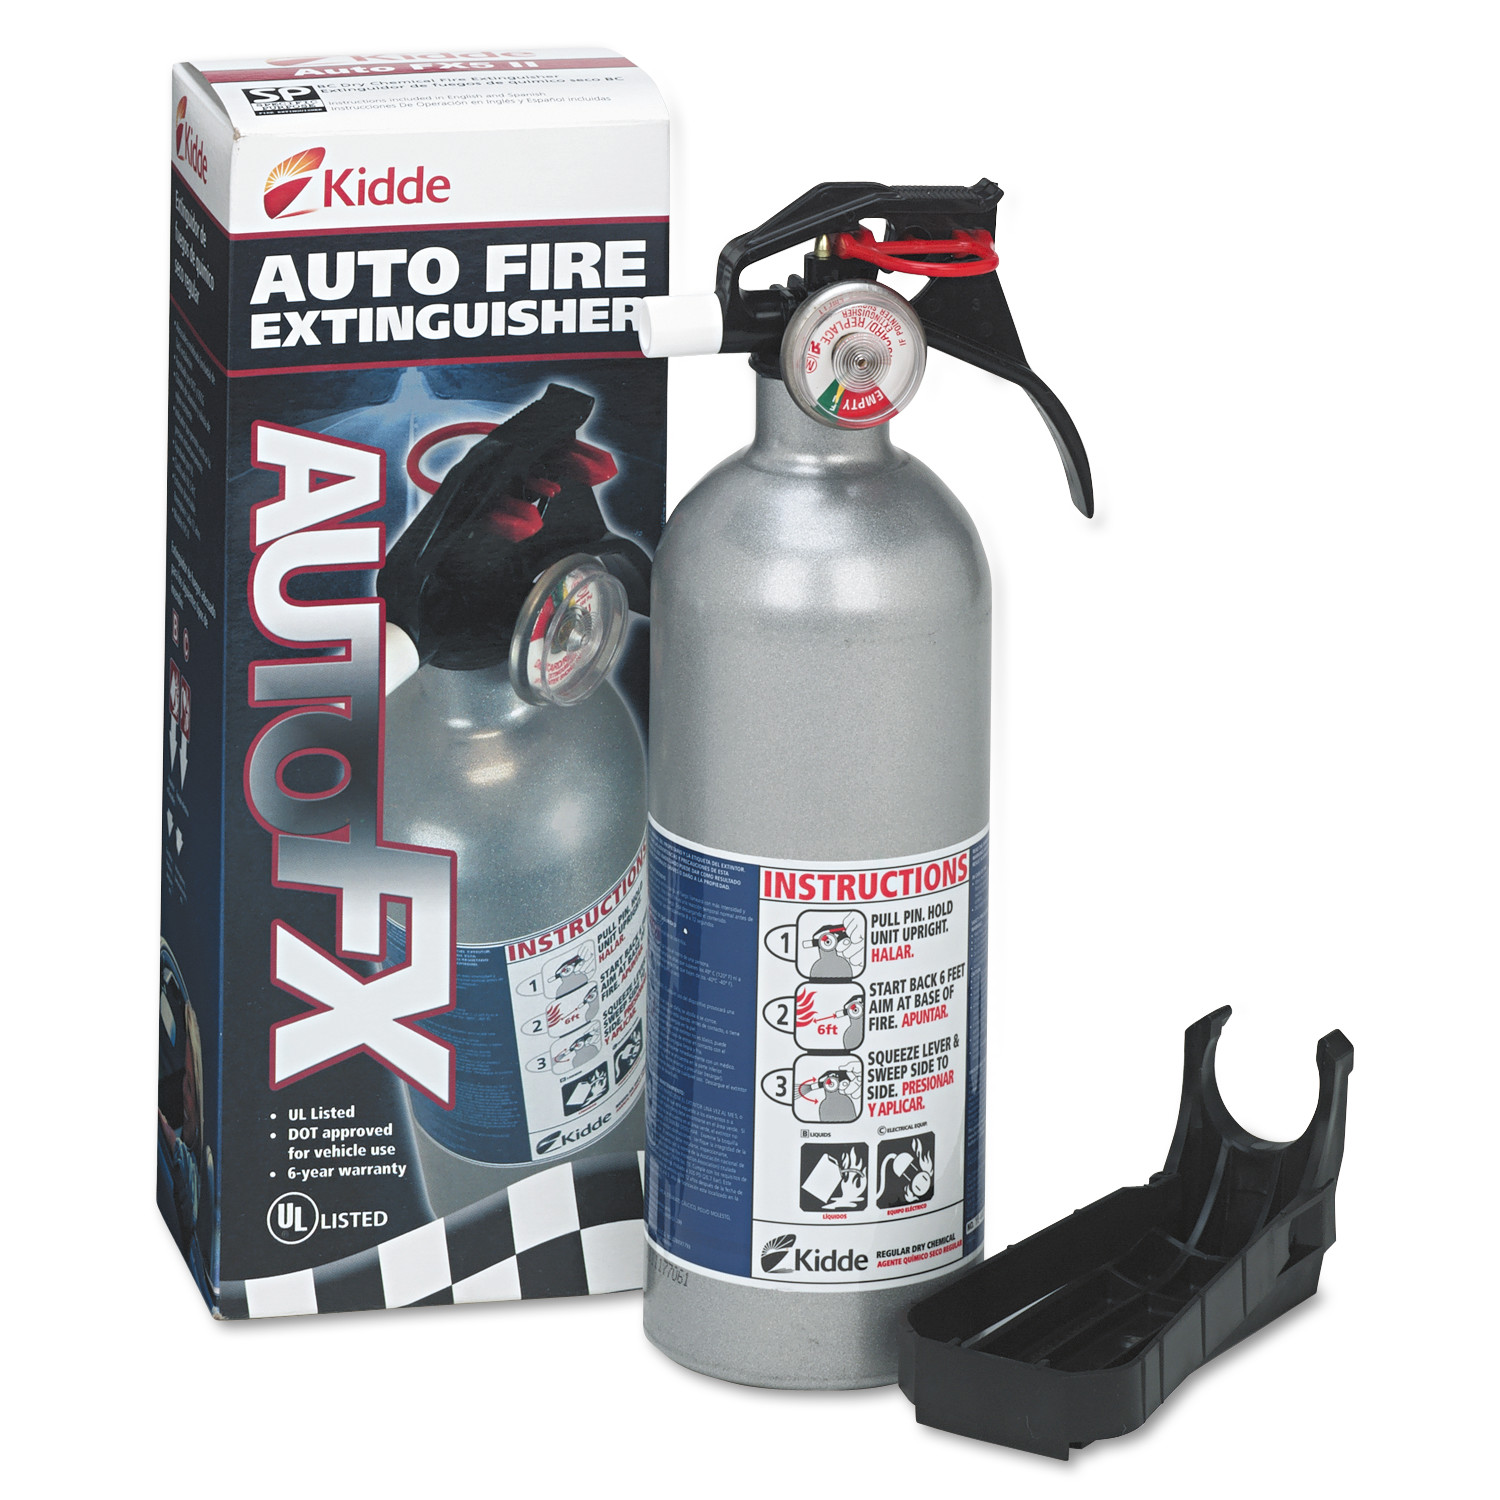 Kidde Auto Fire Extinguisher - image 4 of 5